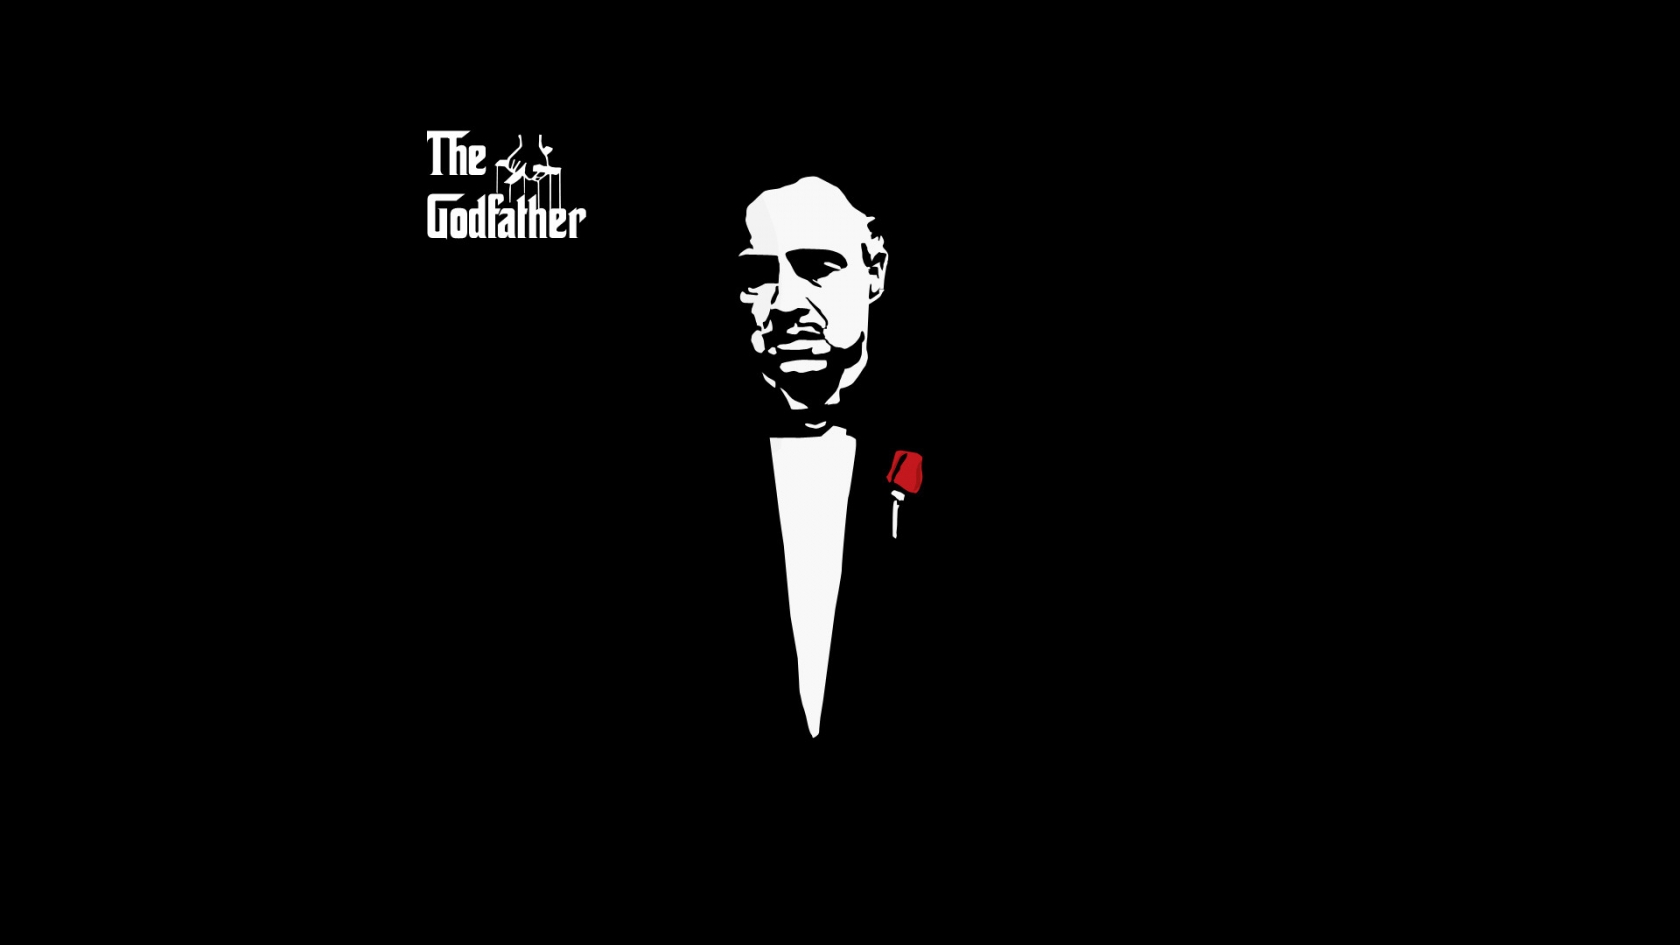 Godfather Fan art for 1680 x 945 HDTV resolution